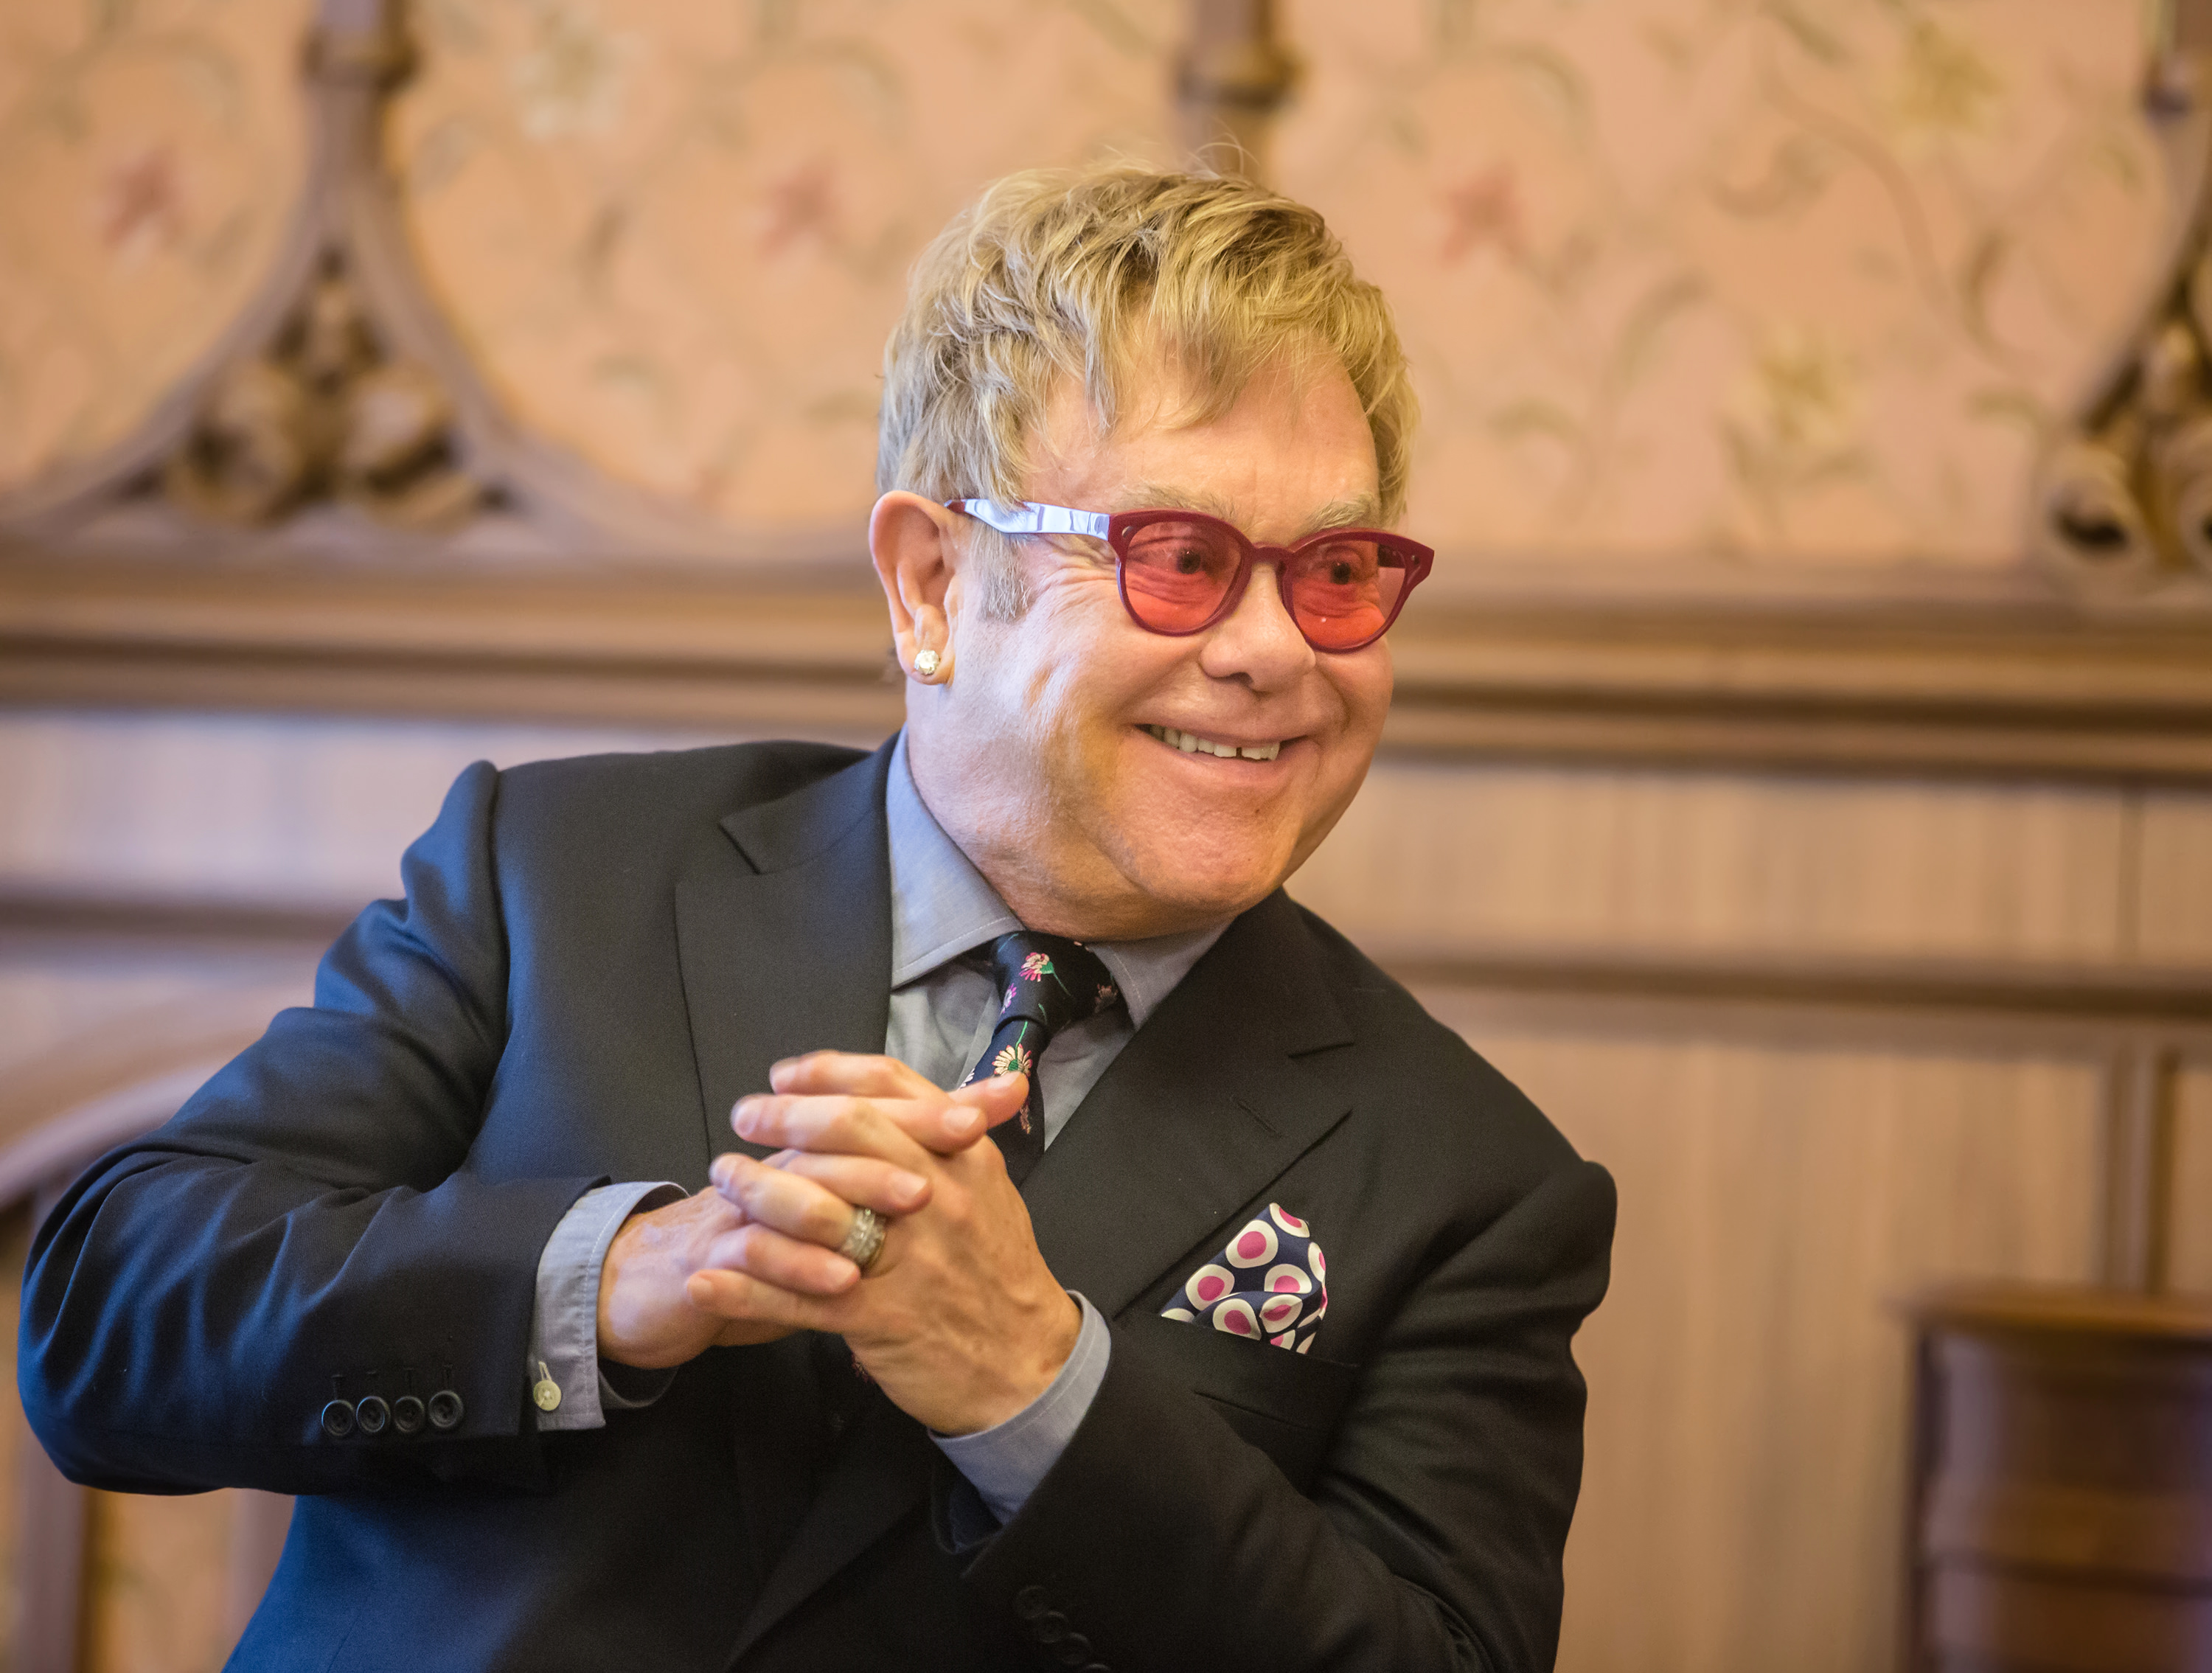 Playlist Elton John’s Most Iconic Songs